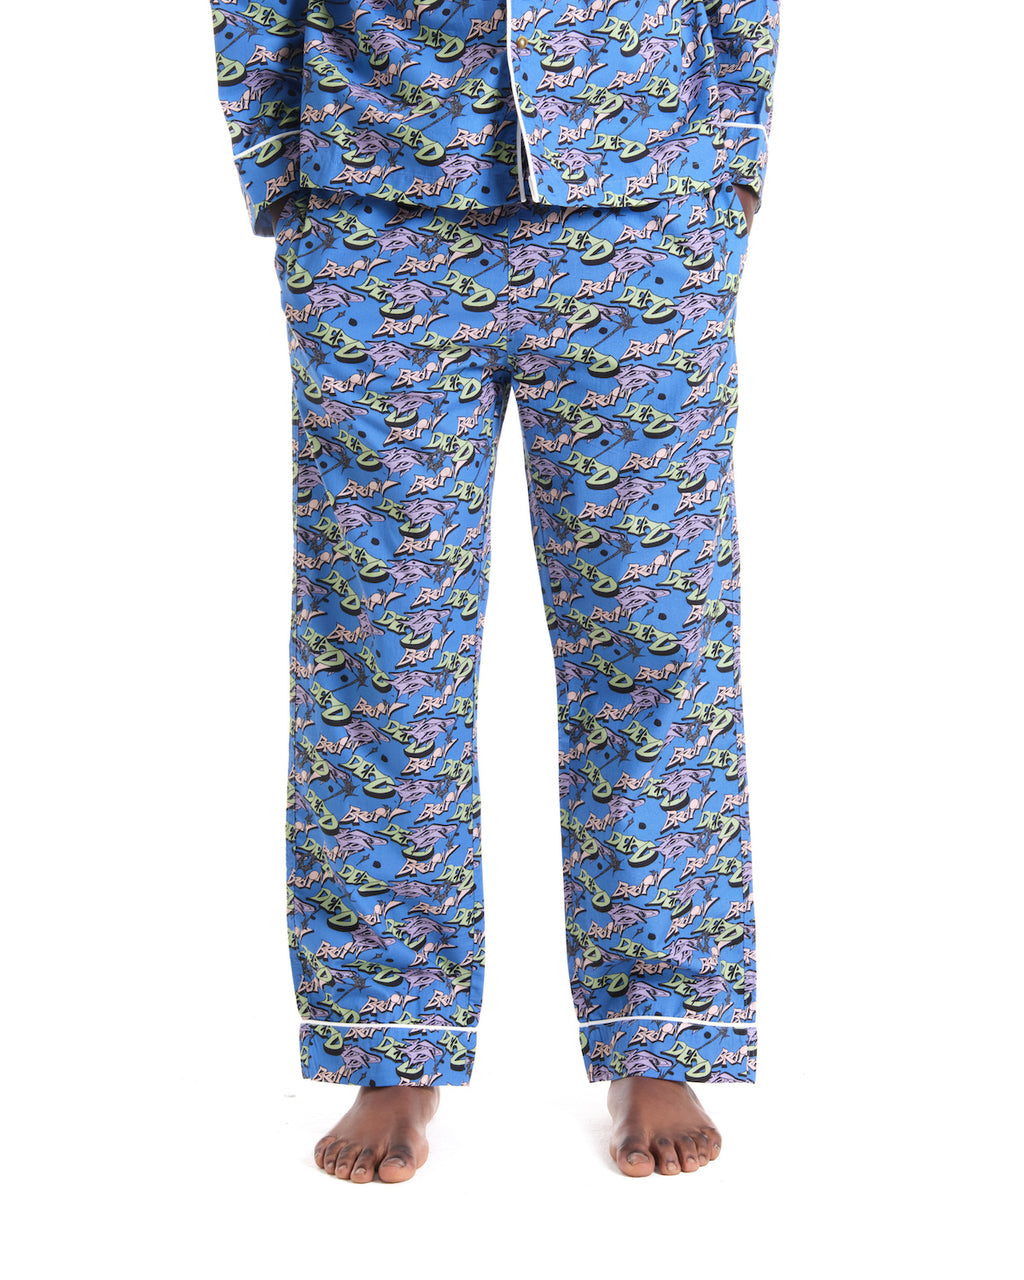 Erratic Pajama Bottom - Multi 3